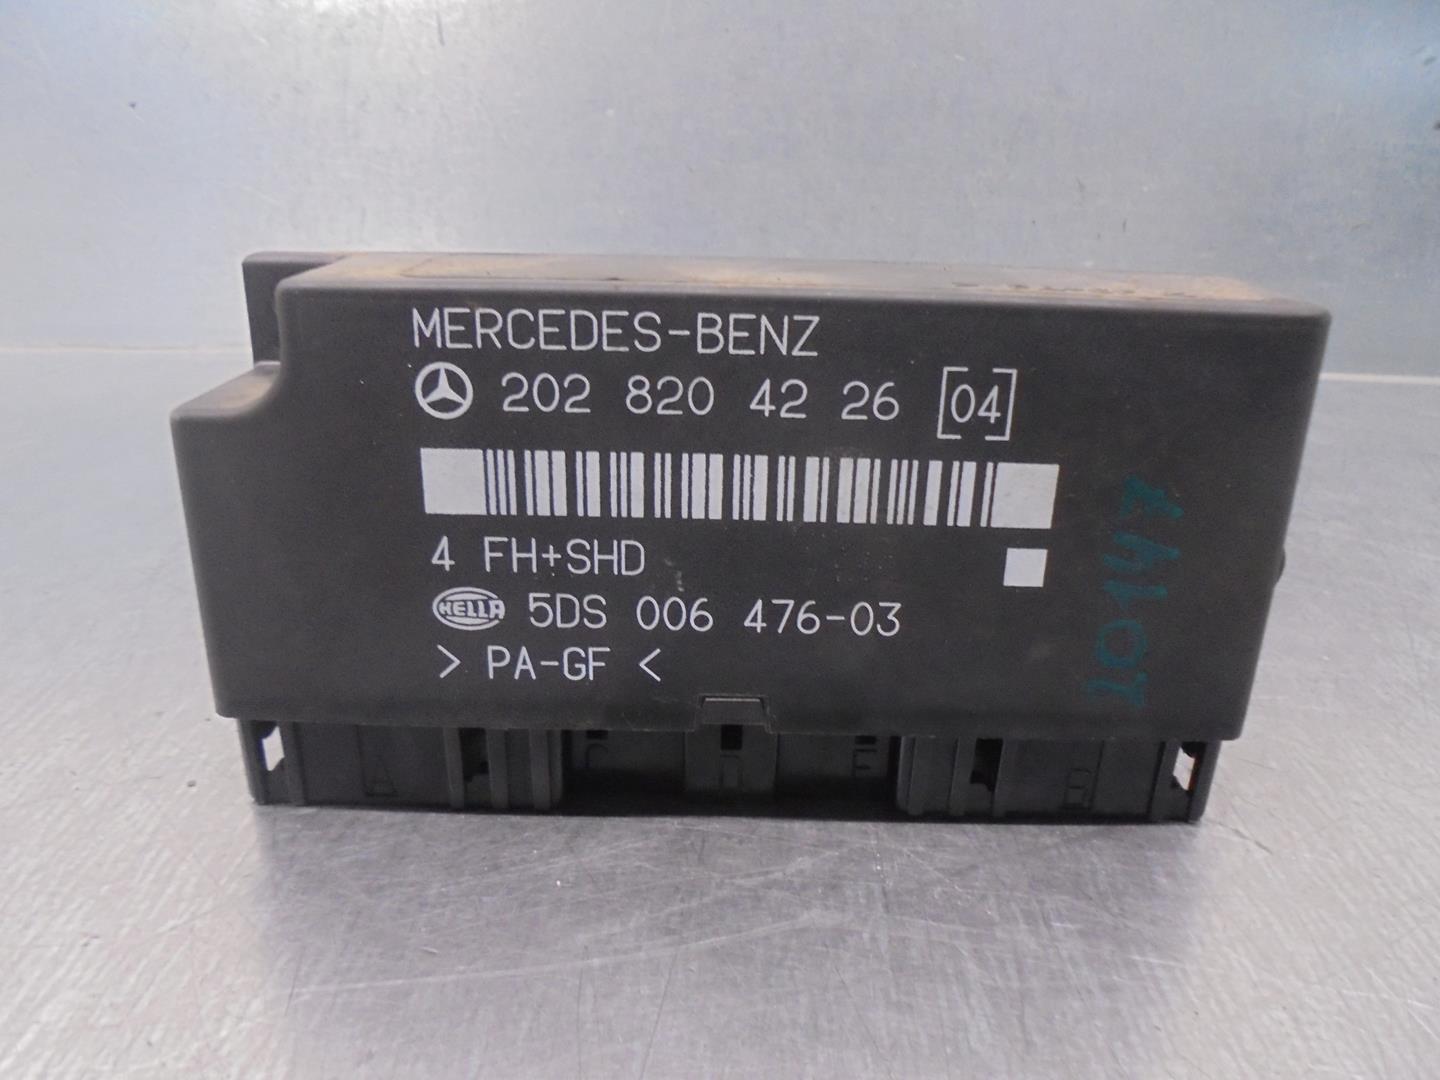 MERCEDES-BENZ C-Class W202/S202 (1993-2001) Другие блоки управления 2028204226, 5DS00647603, HELLA 24223554